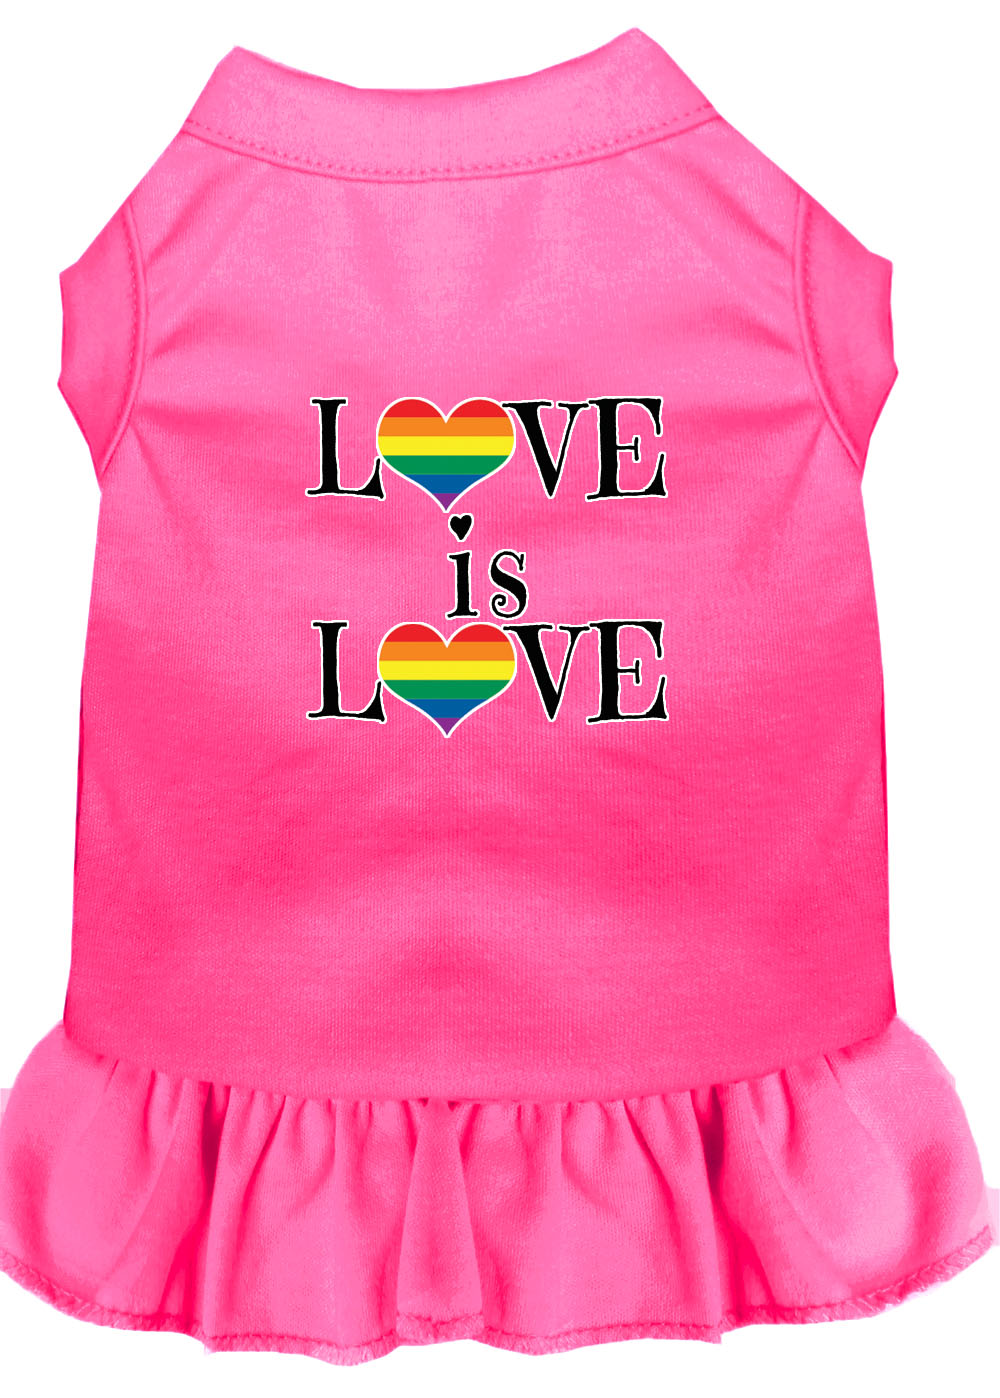 Love is Love Screen Print Dog Dress Bright Pink 4X